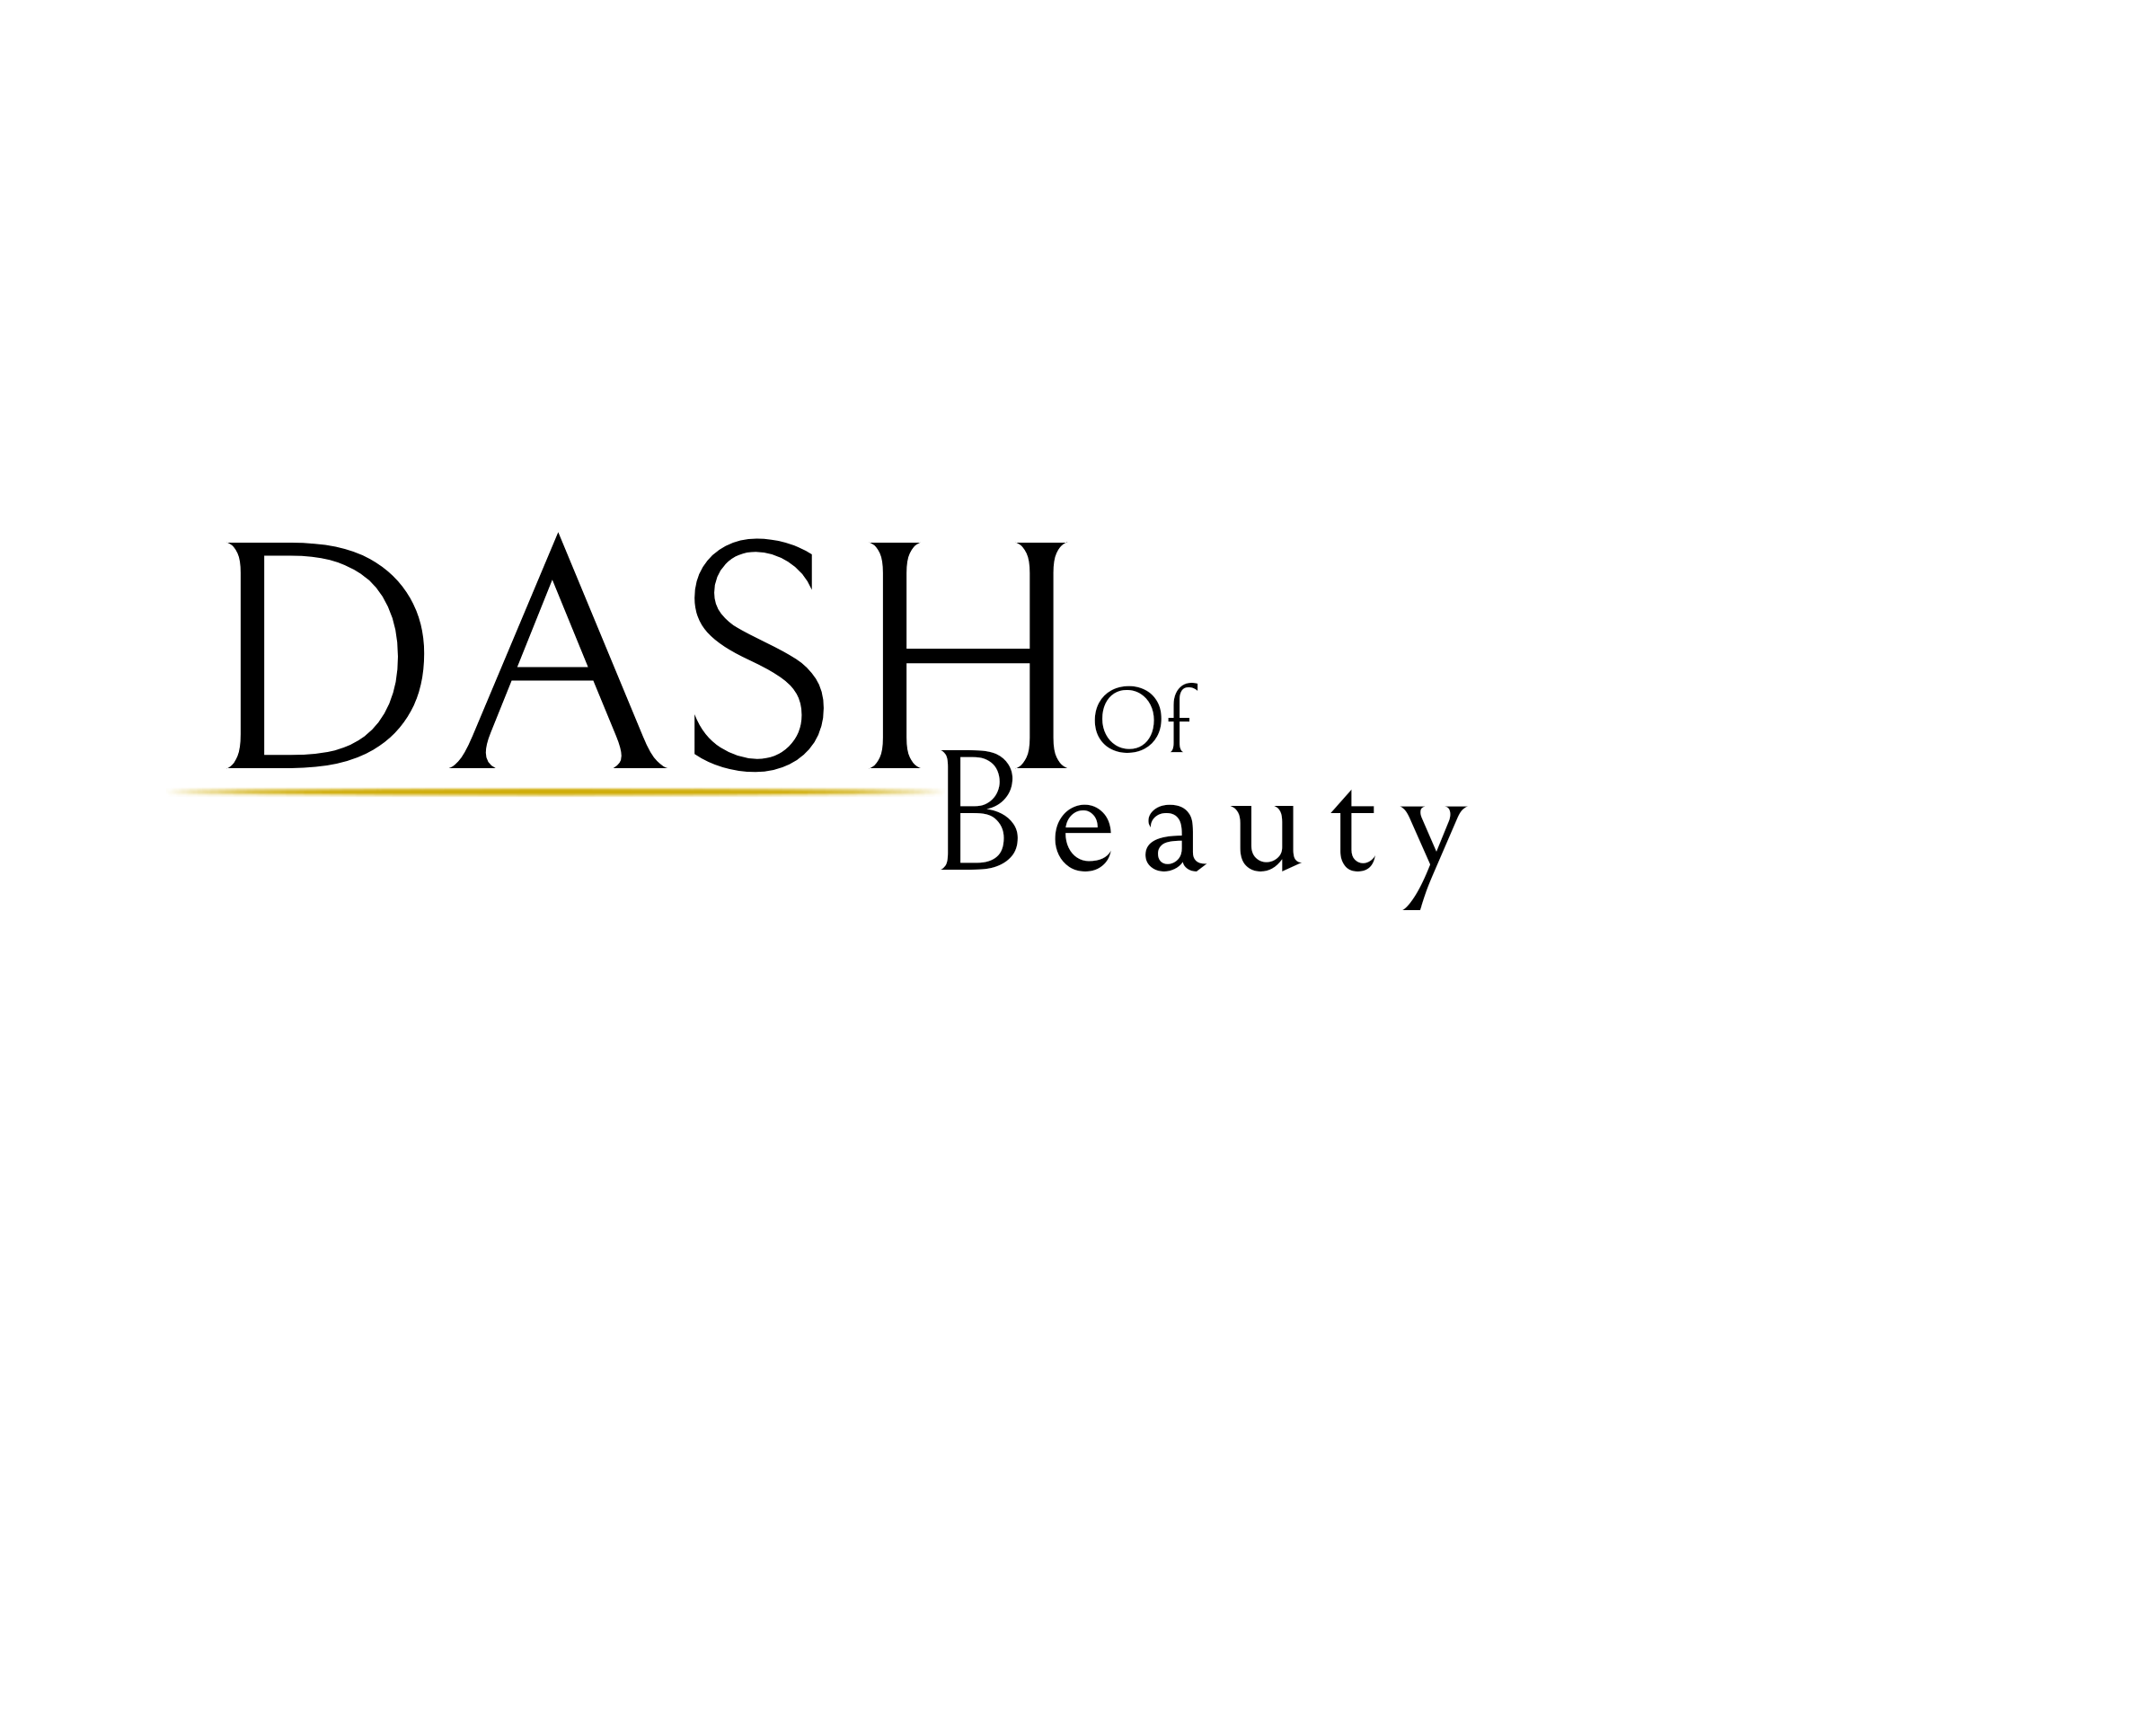 Dash of beauty